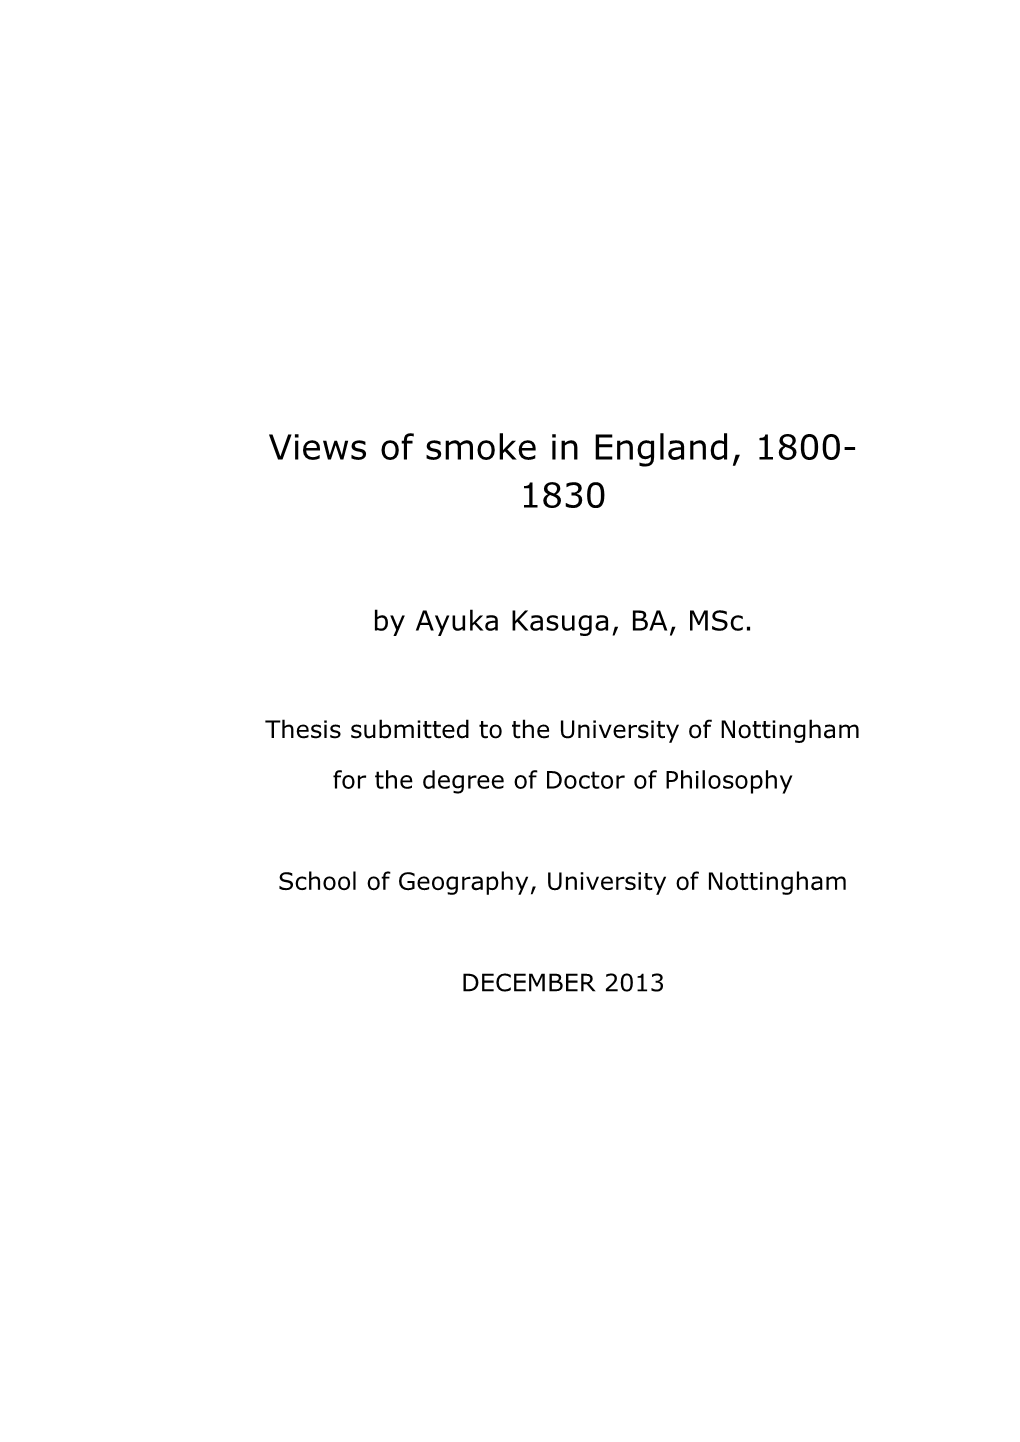 Views of Smoke in England, 1800-1830